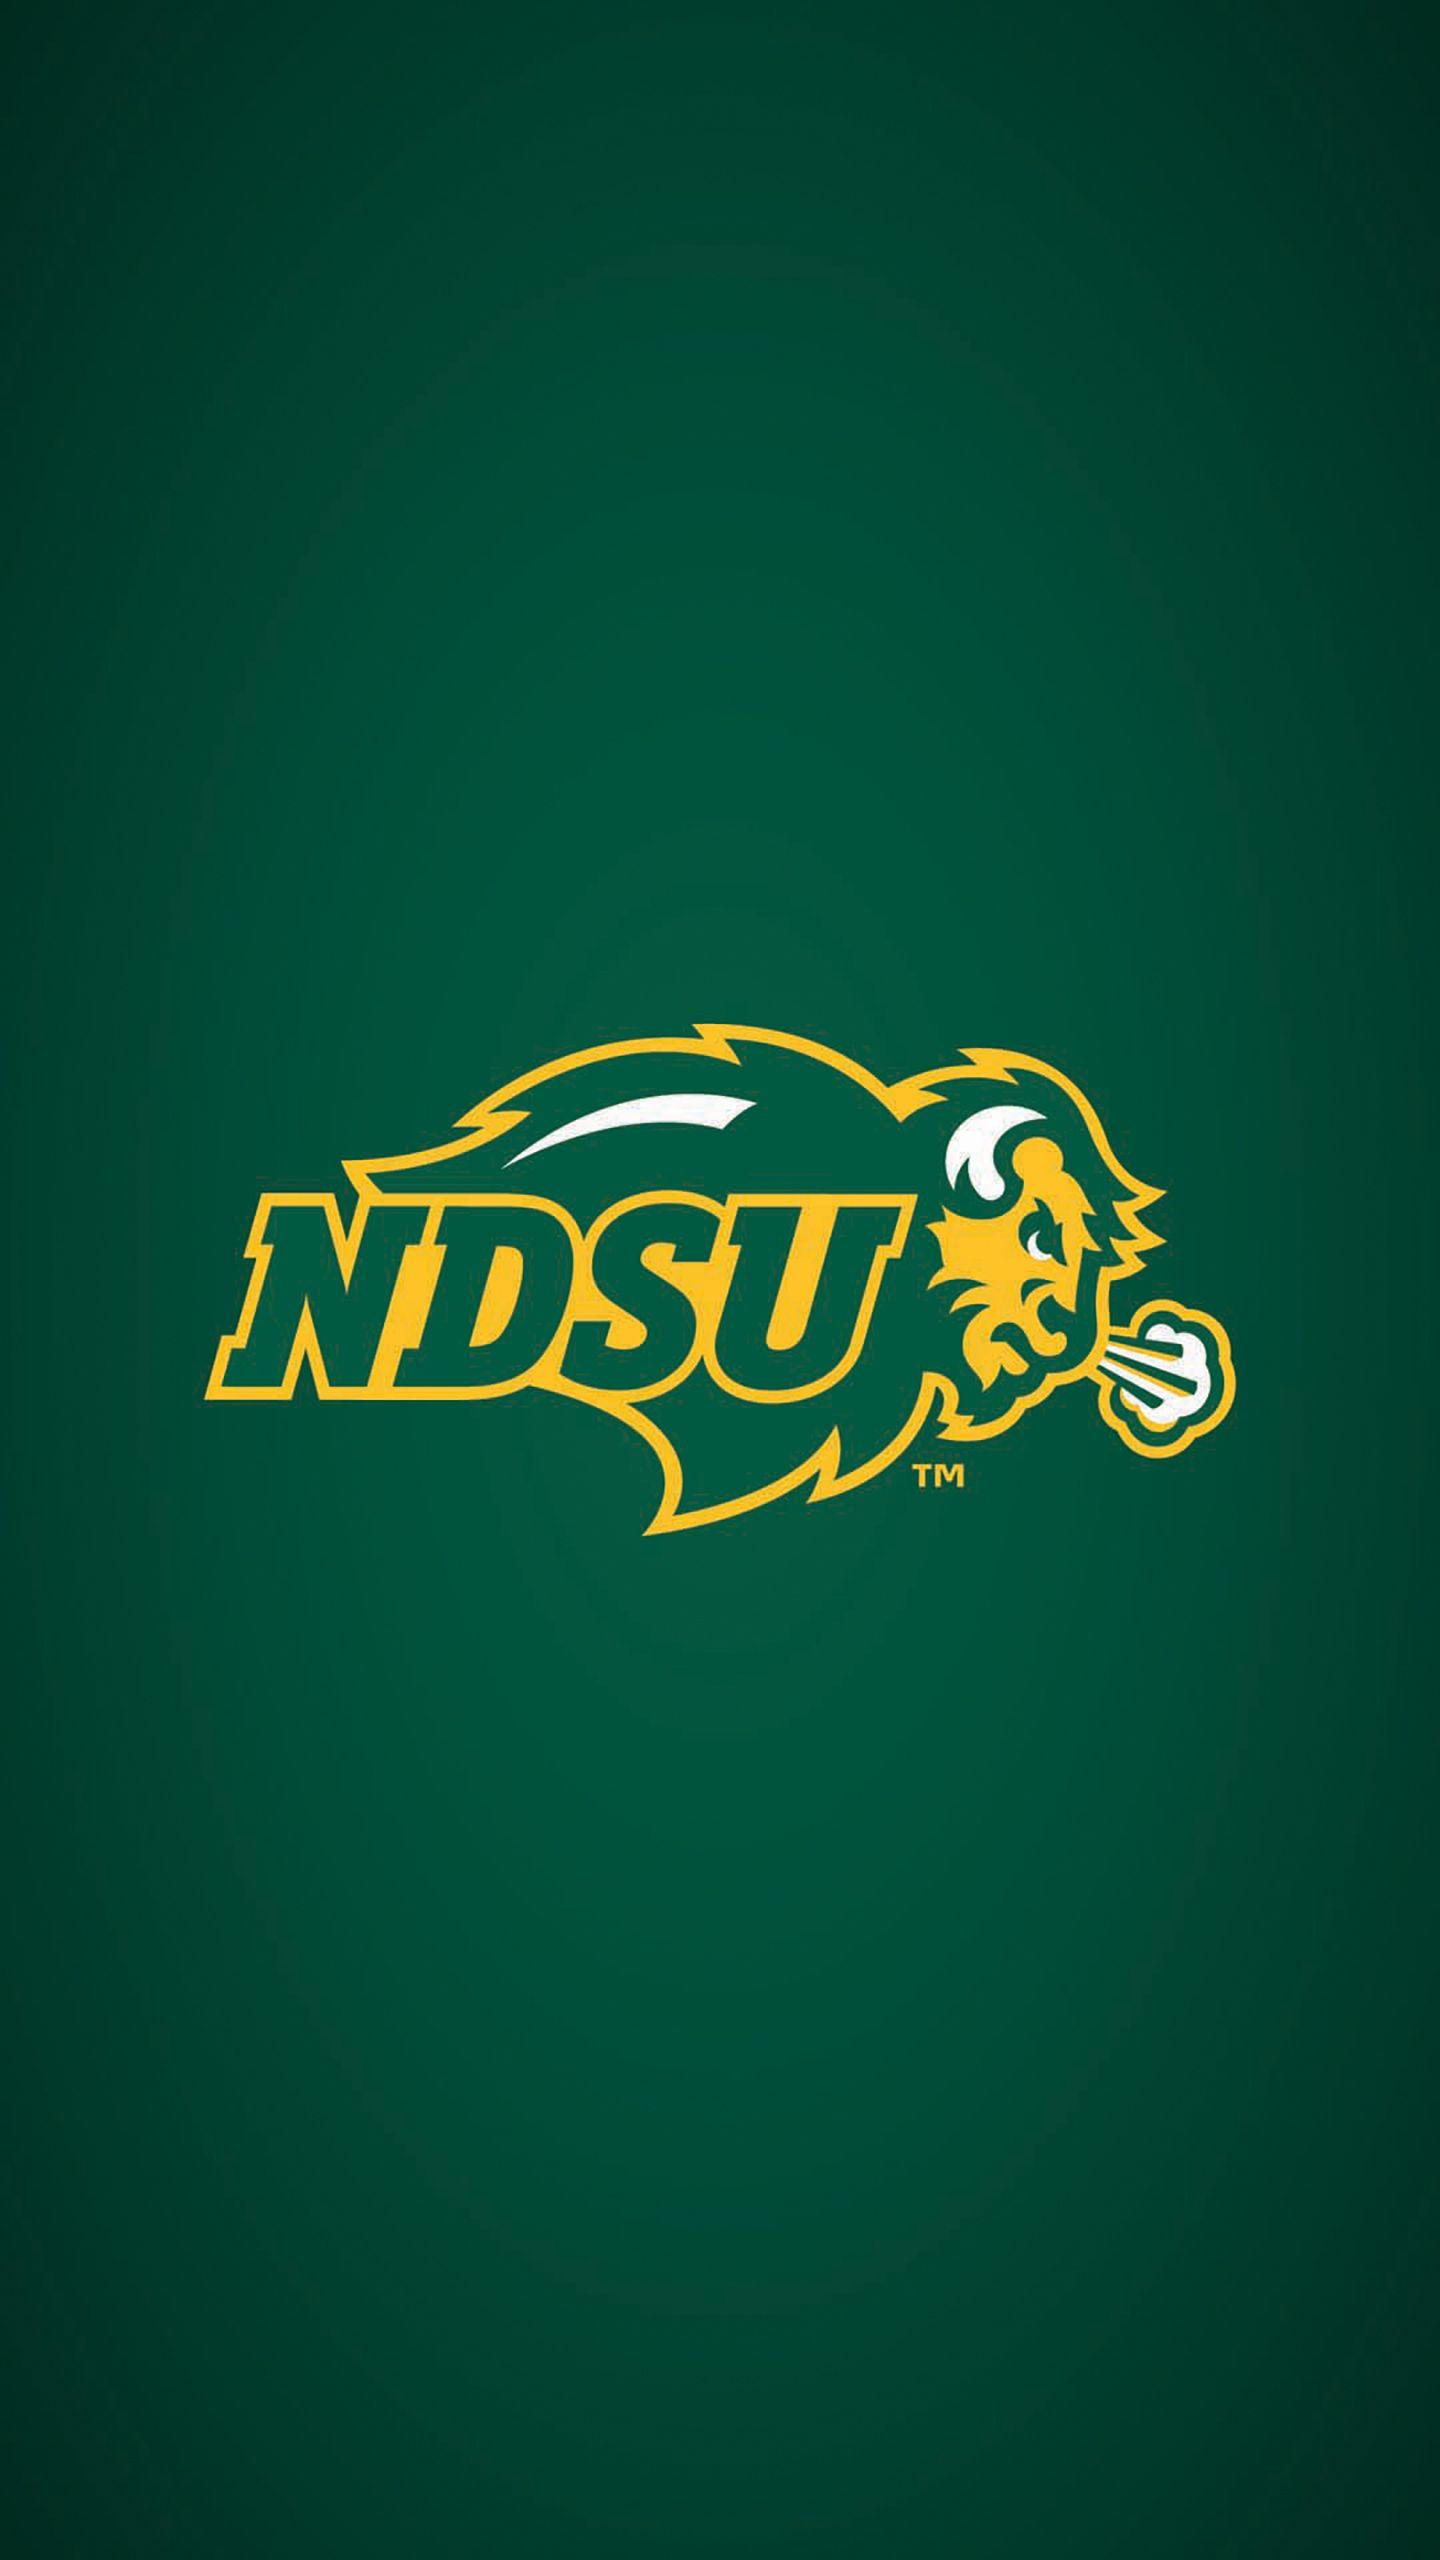 Nsdu Logo - Wallpaper | University Relations | NDSU